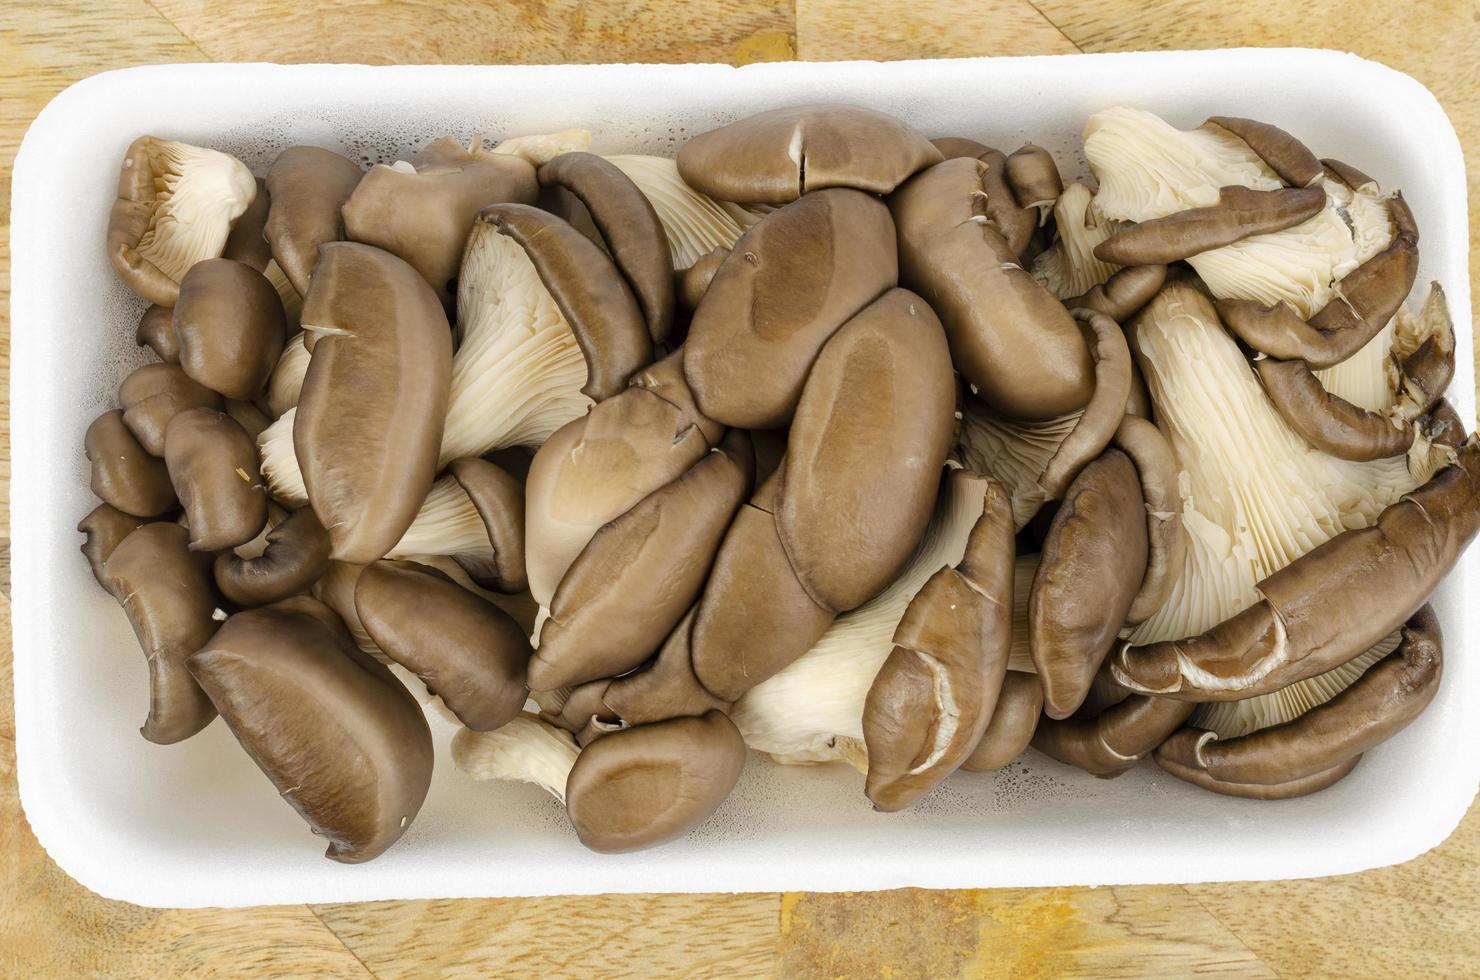 hongos ostra grises frescos cultivados para la cocina. foto de estudio